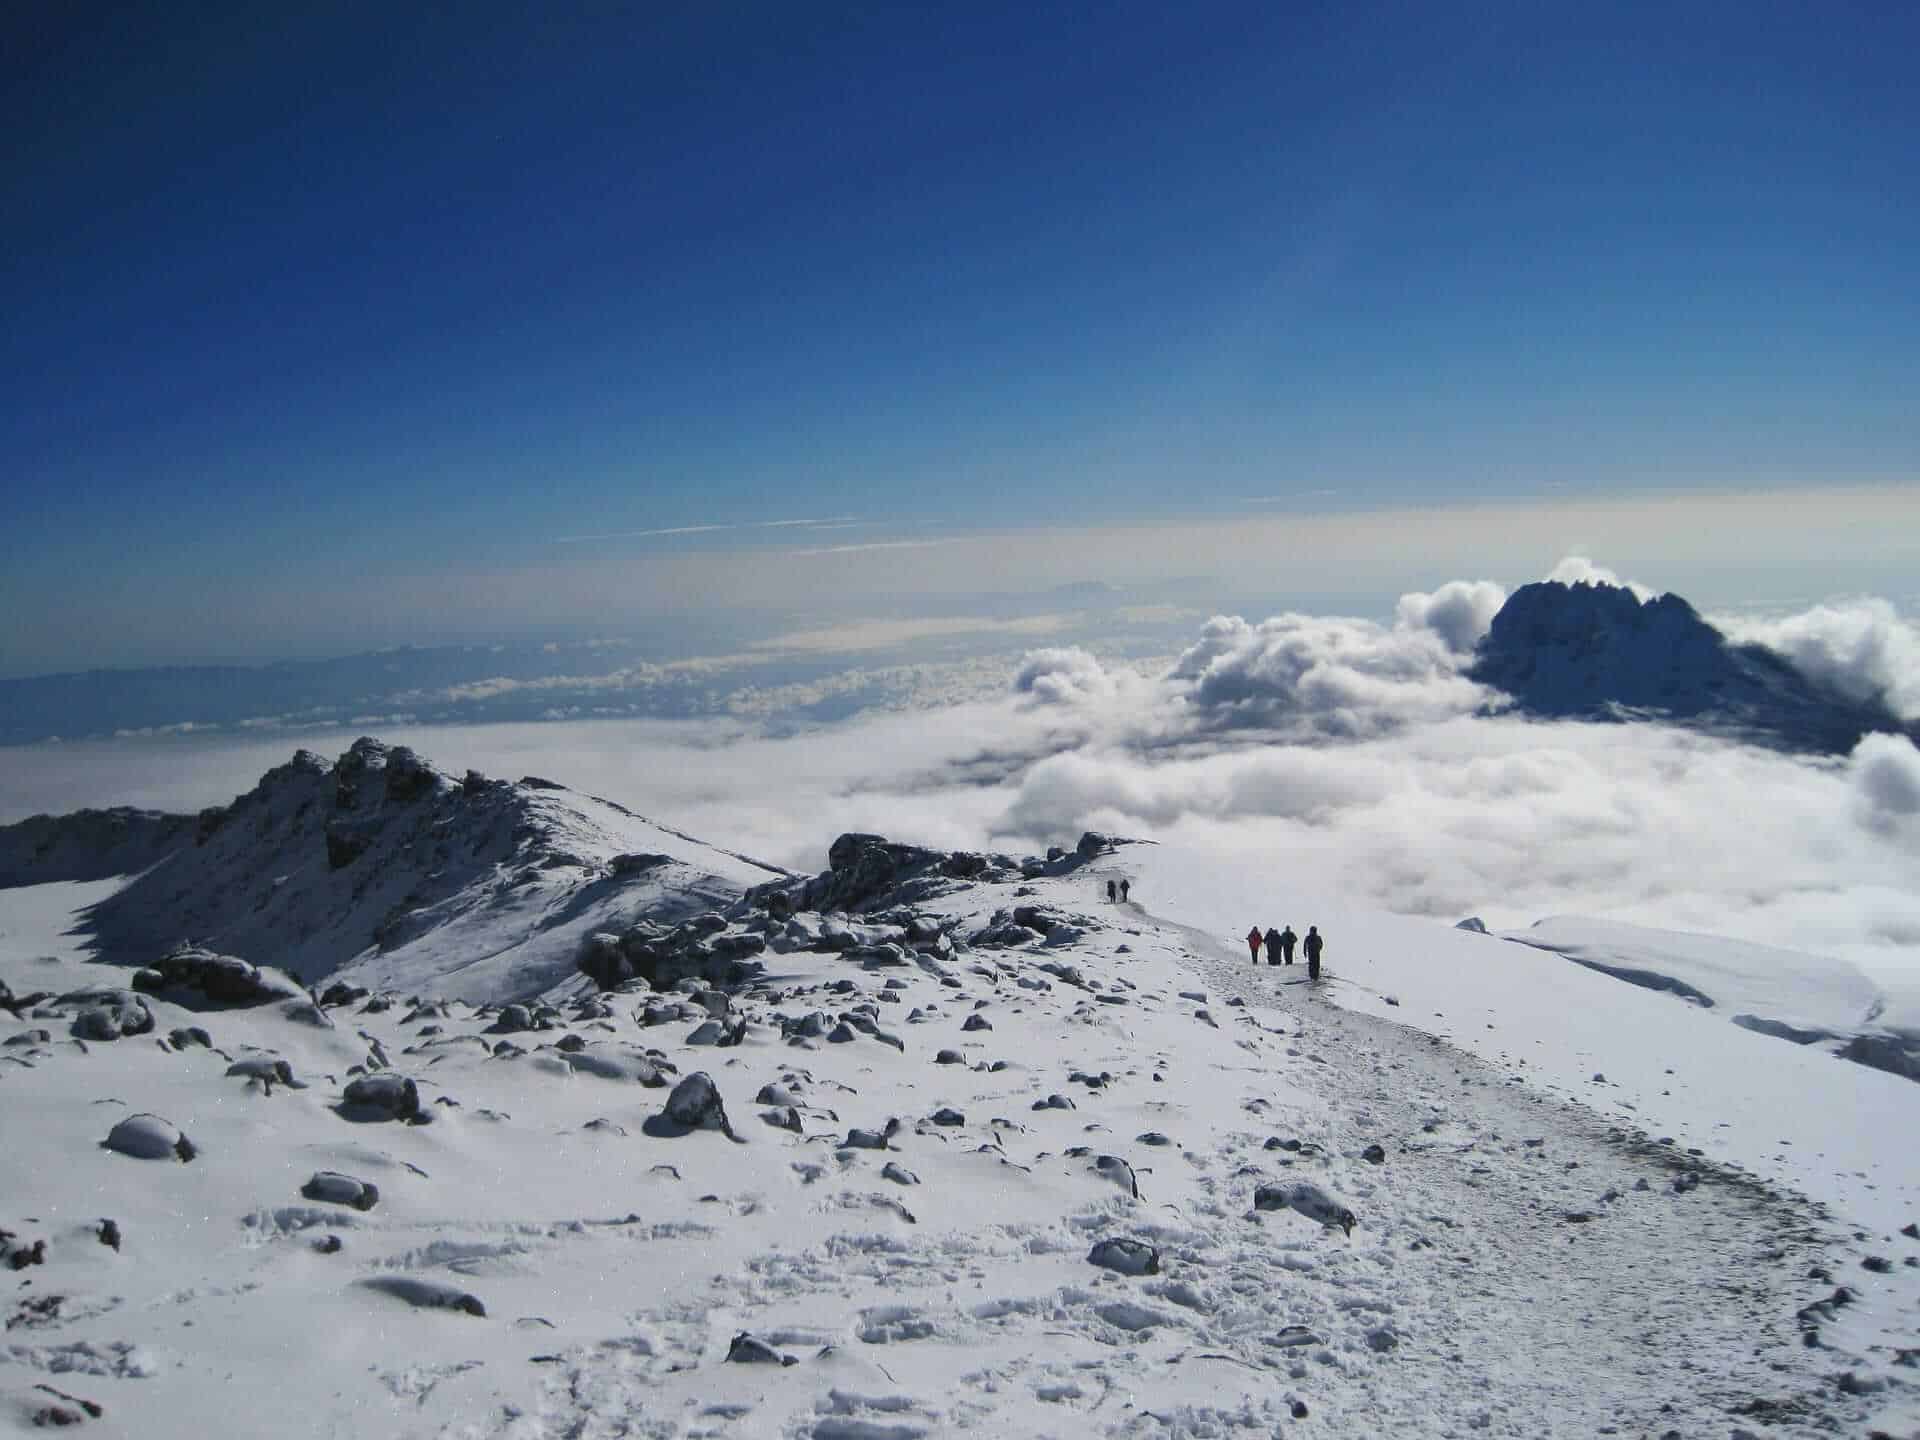 View from Kilimanjaro